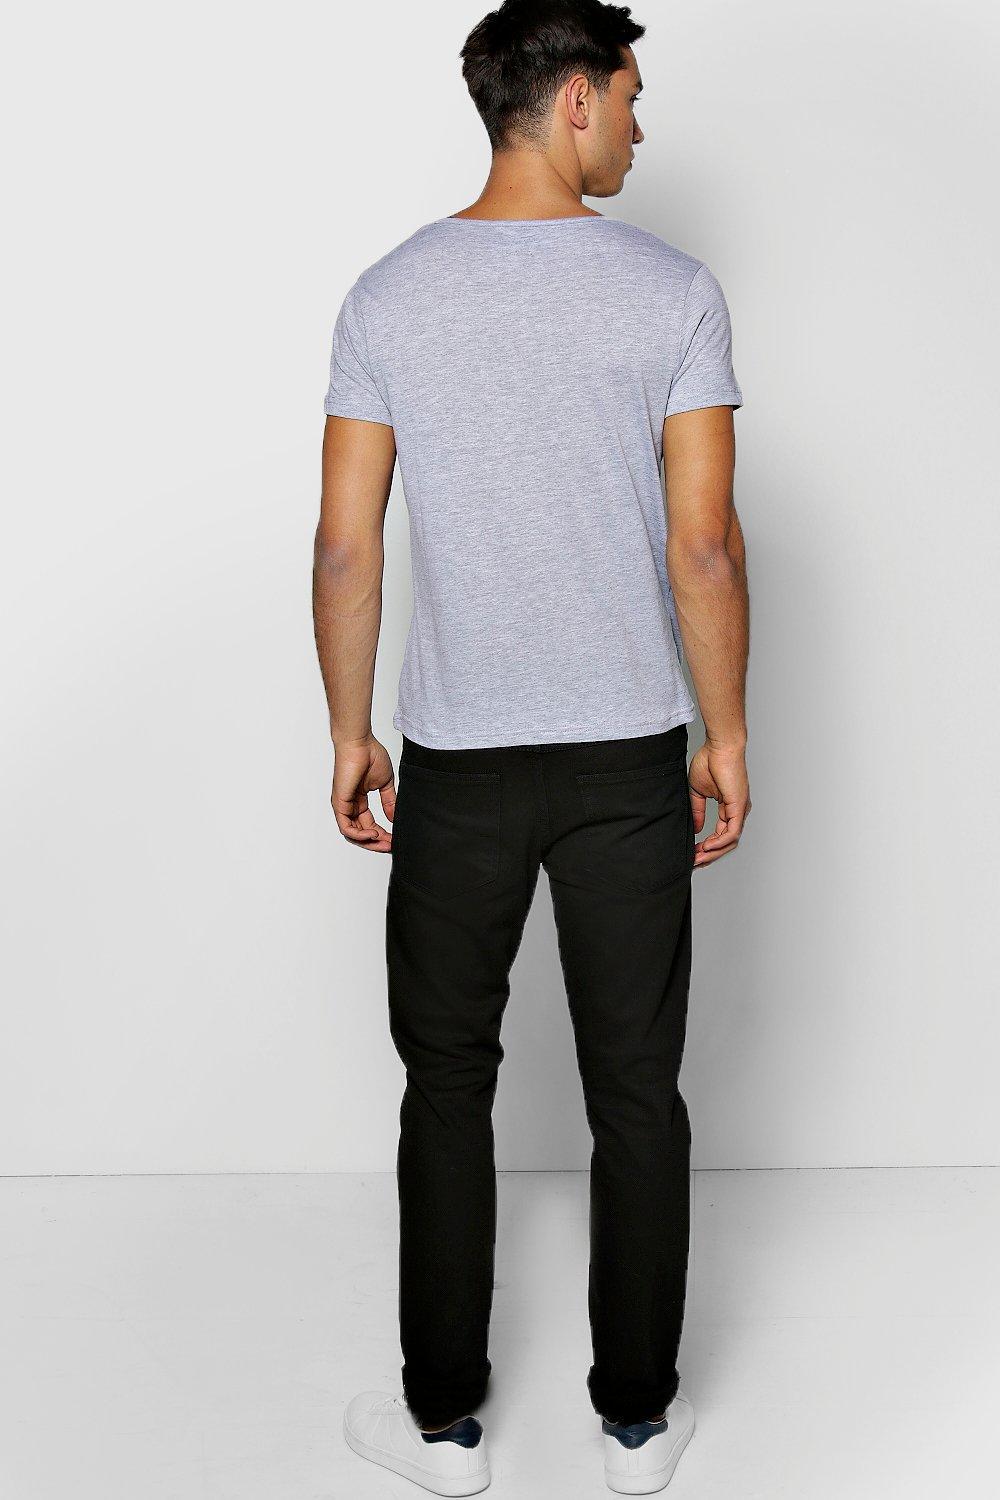 Boohoo Mens Short Sleeve Deep V Neck Waist Length Top T Shirt MD1B | eBay